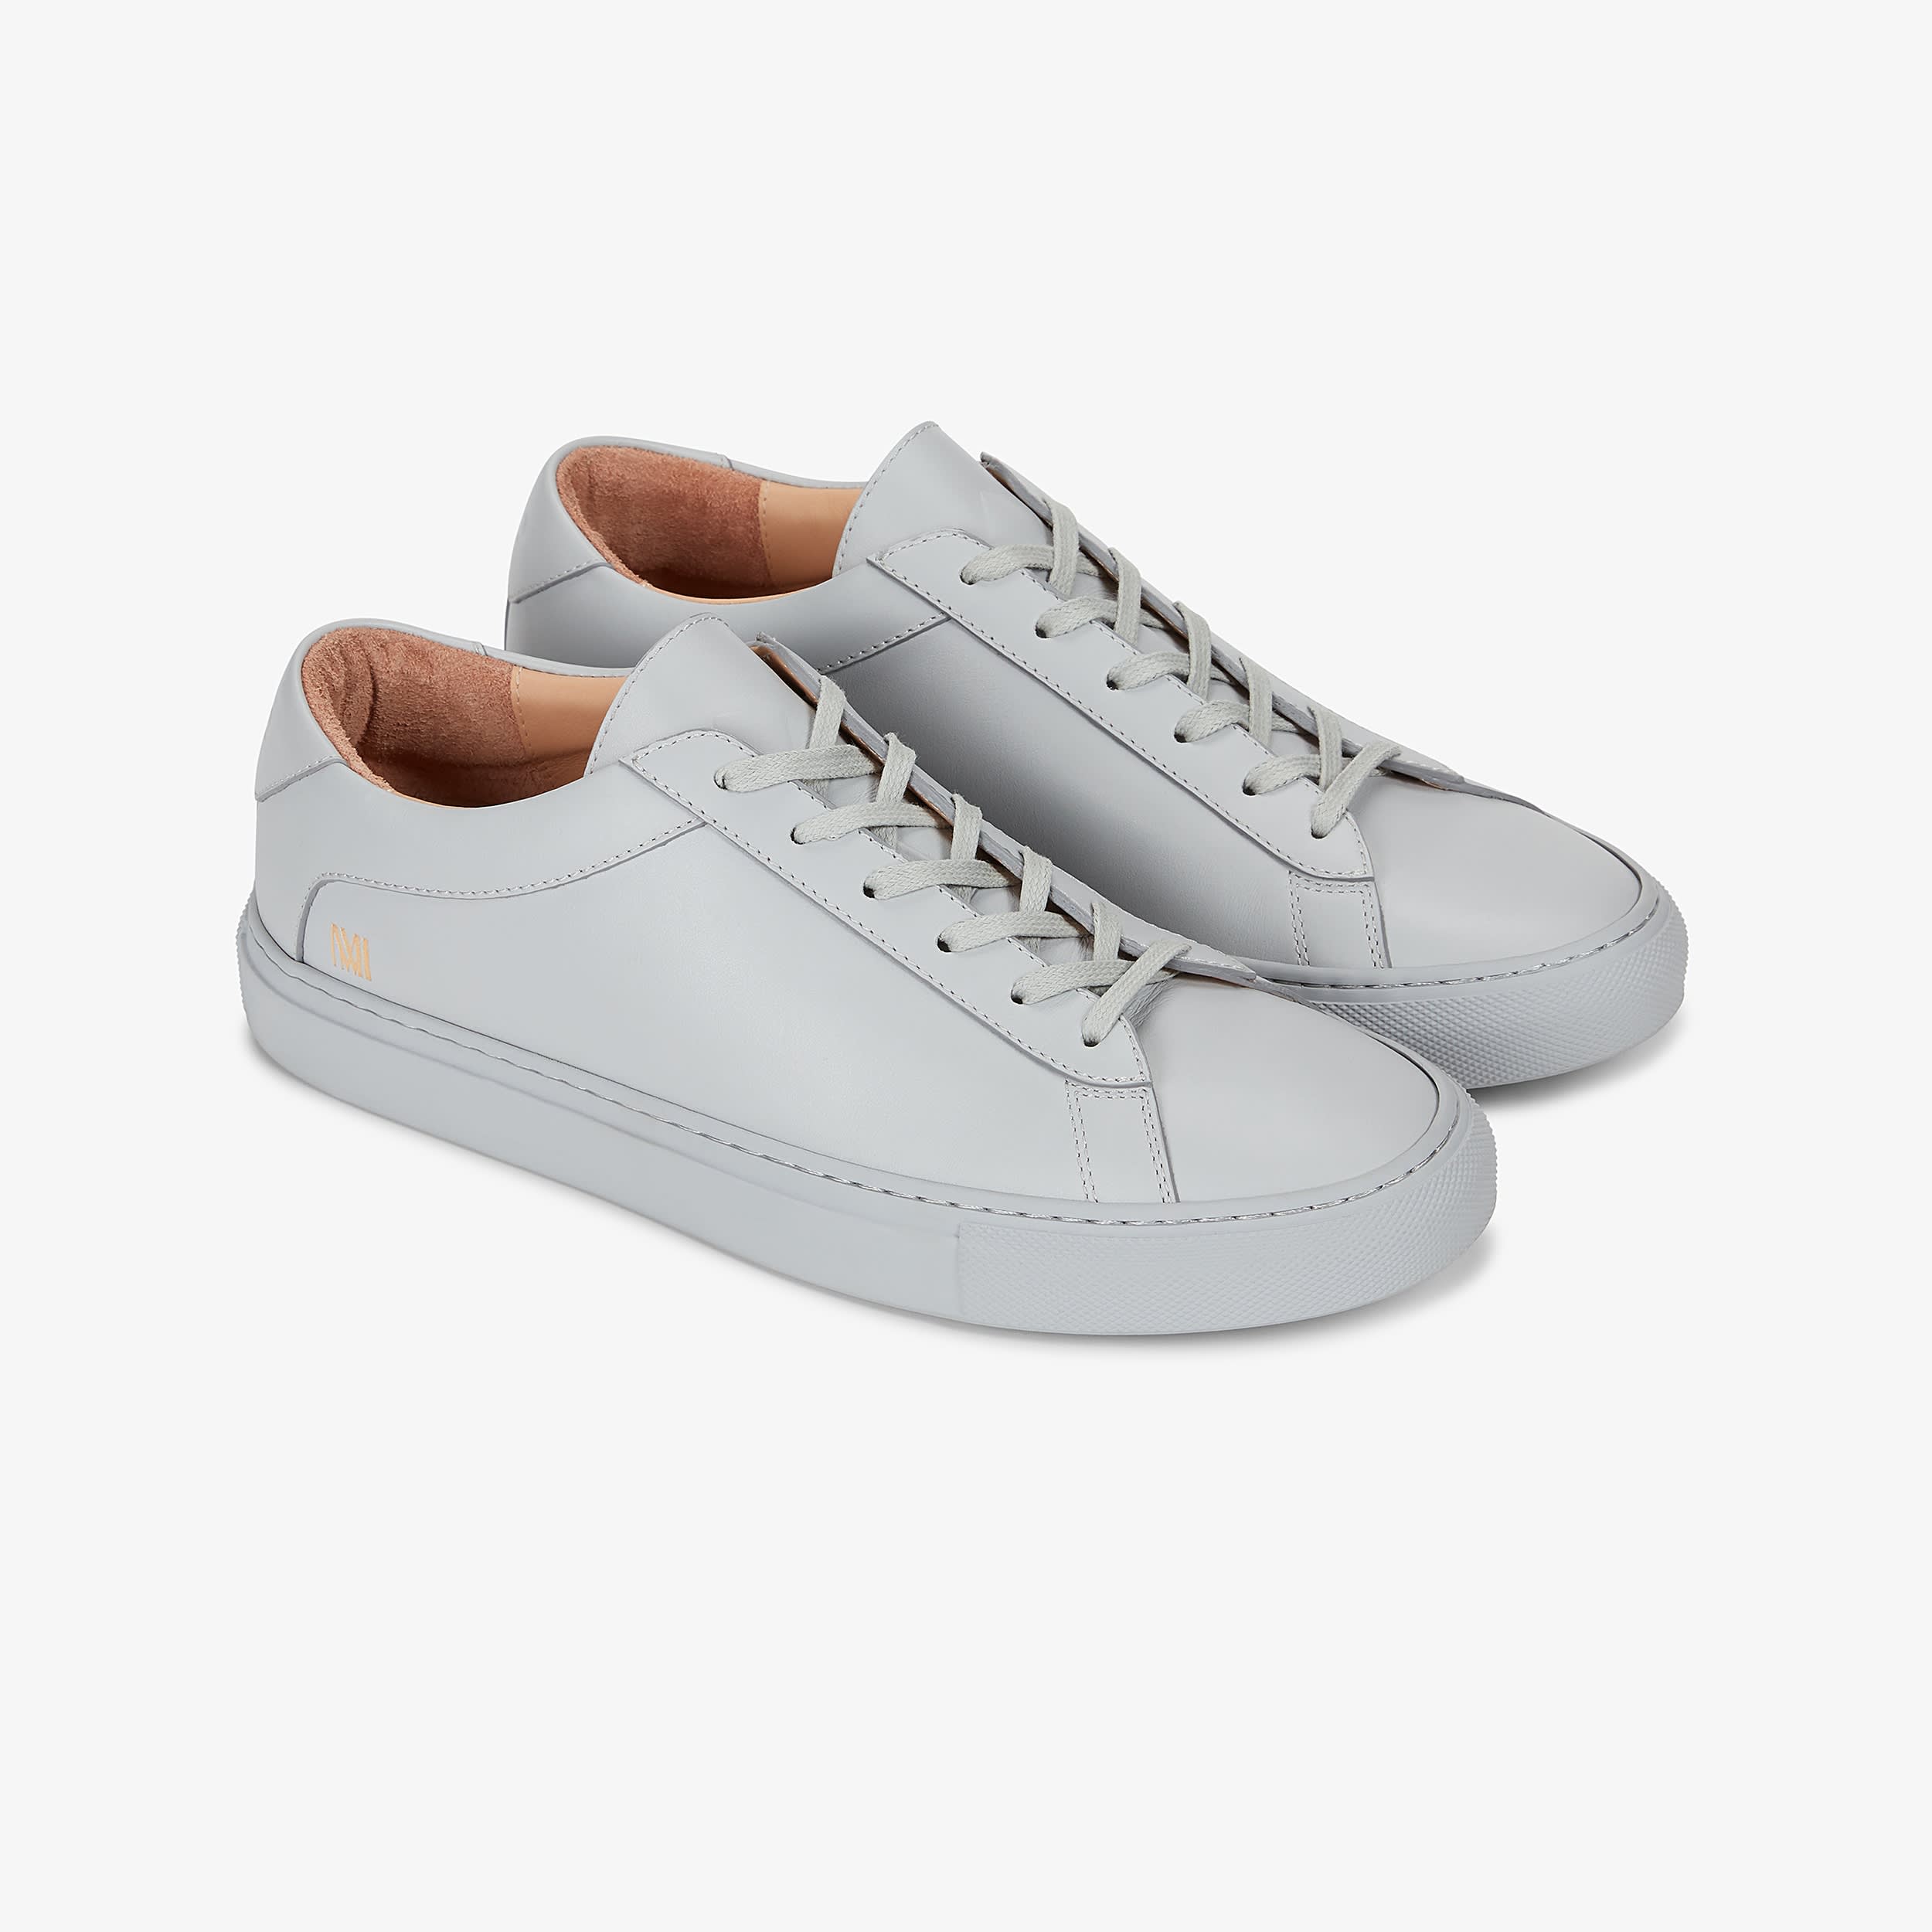 M.M.LaFleur x Koio Capri Low-Top Sneakers - Leather :: Smoke